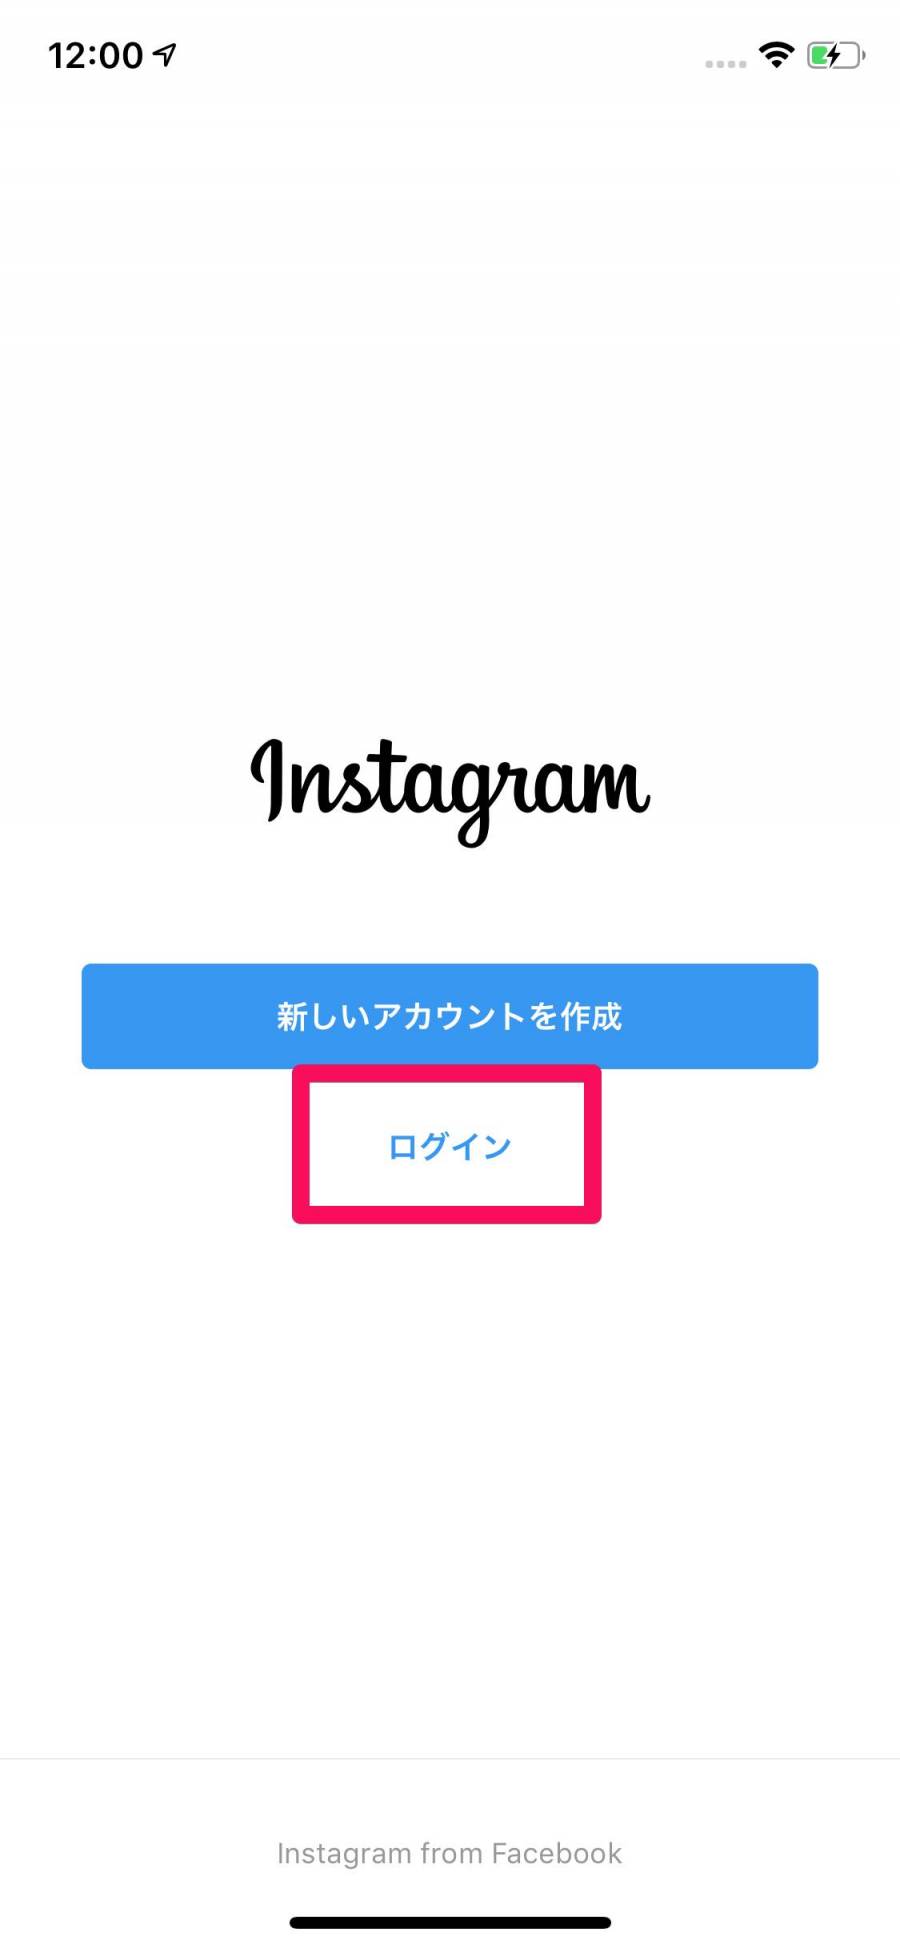 Instagramアプリ ログイン画面